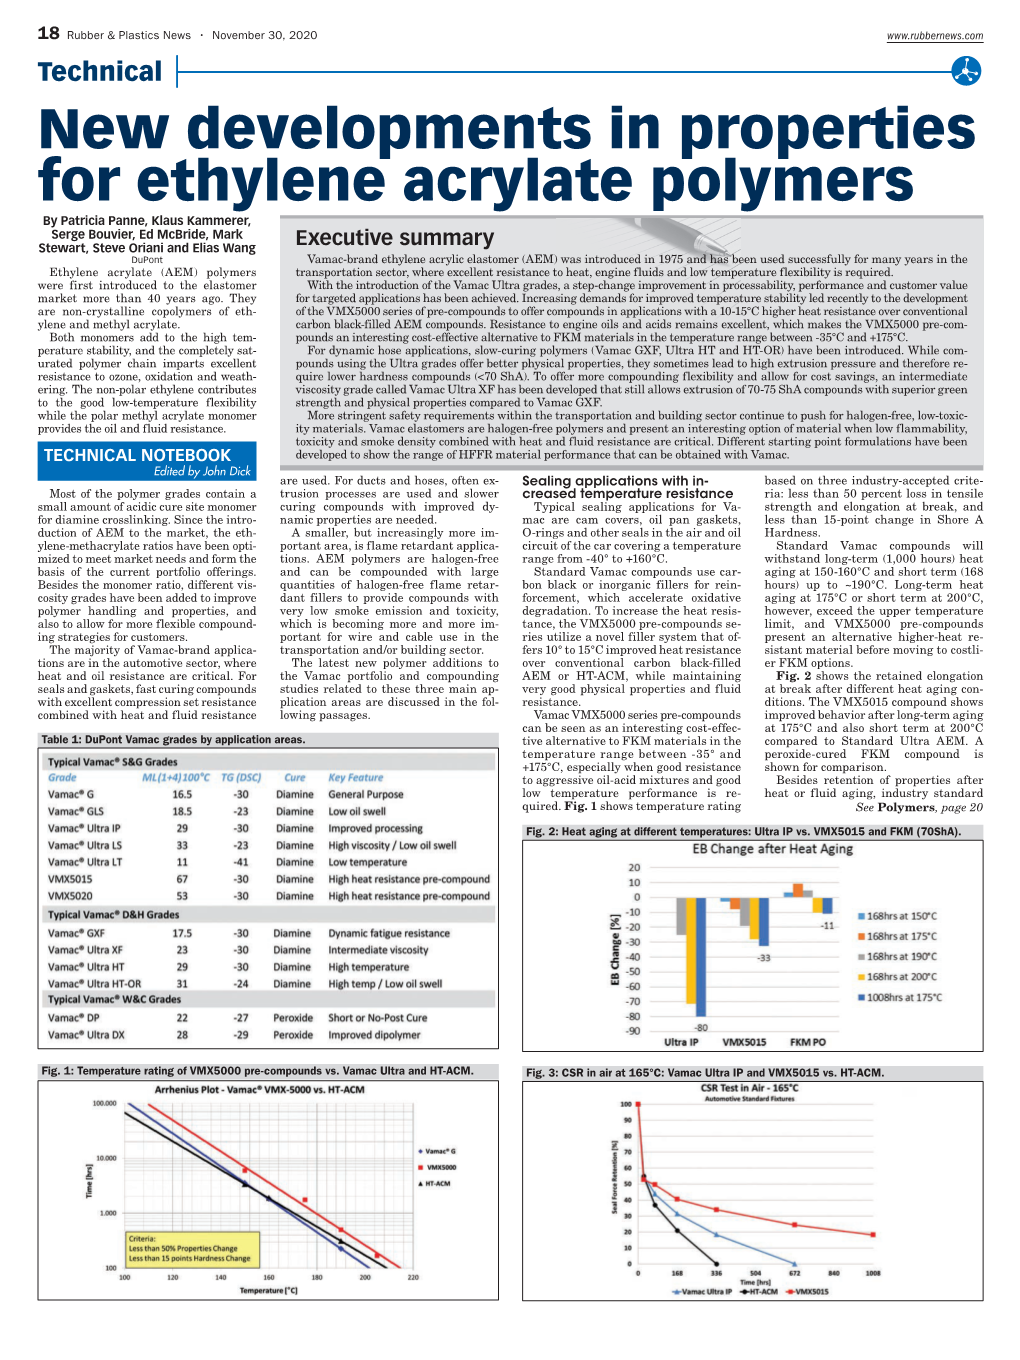 New Developments in Properties for Ethylene Acrylate Polymers